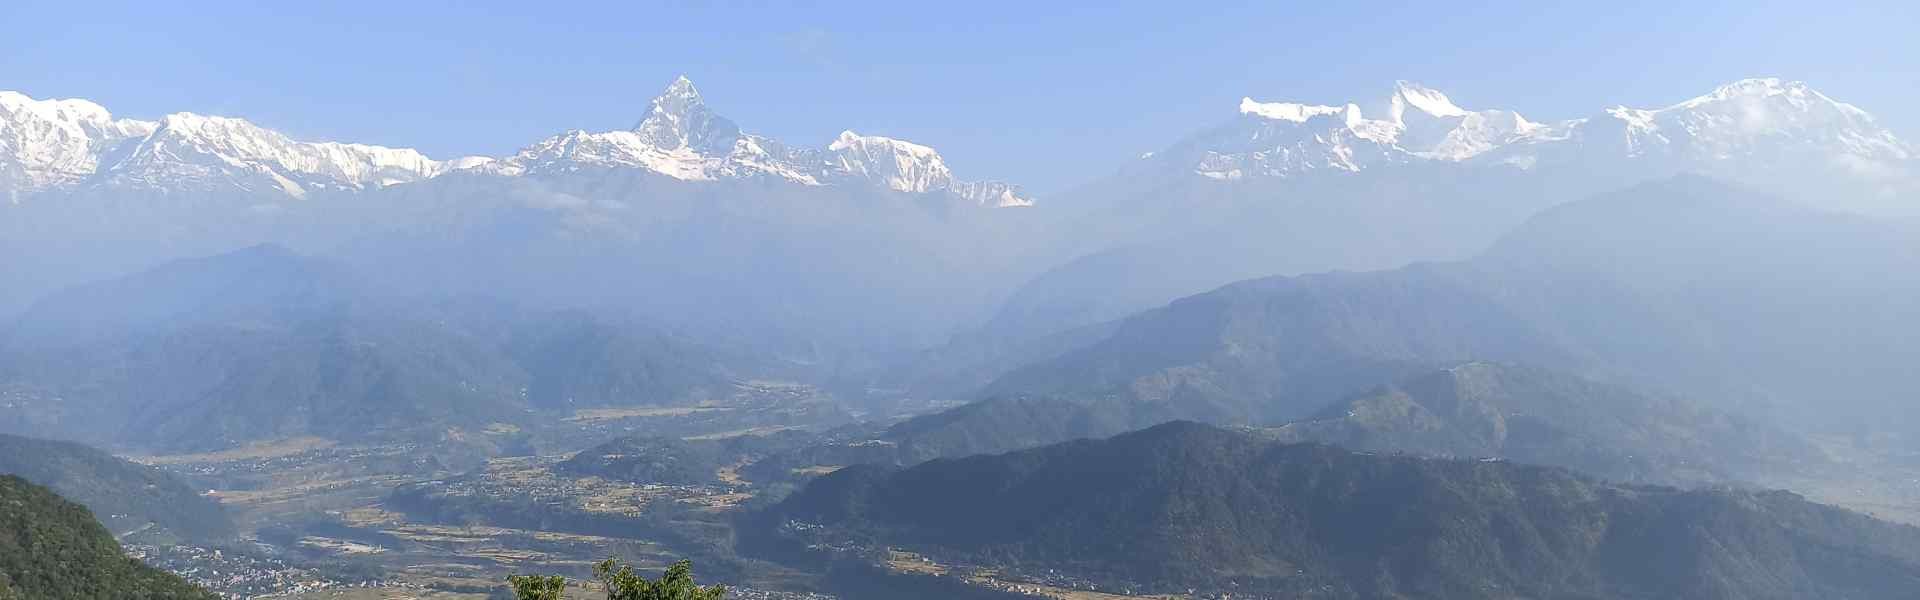 The Best of Nepal Tour, Trekking Planner Inc.